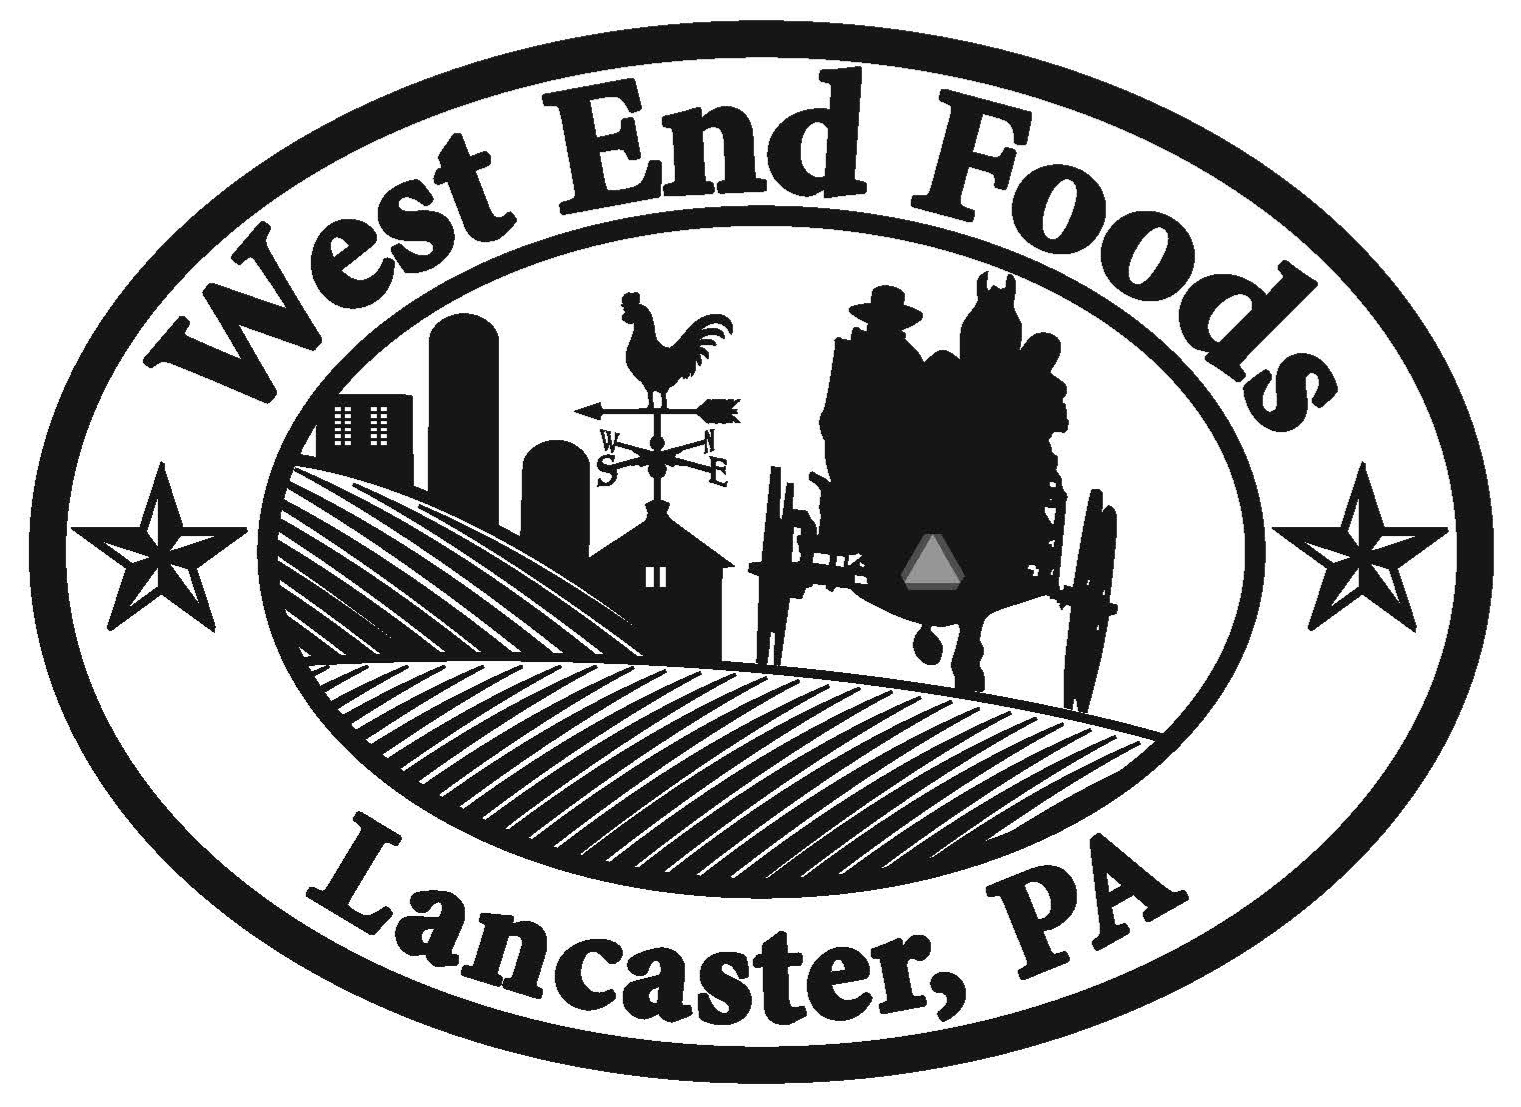 West End Foods